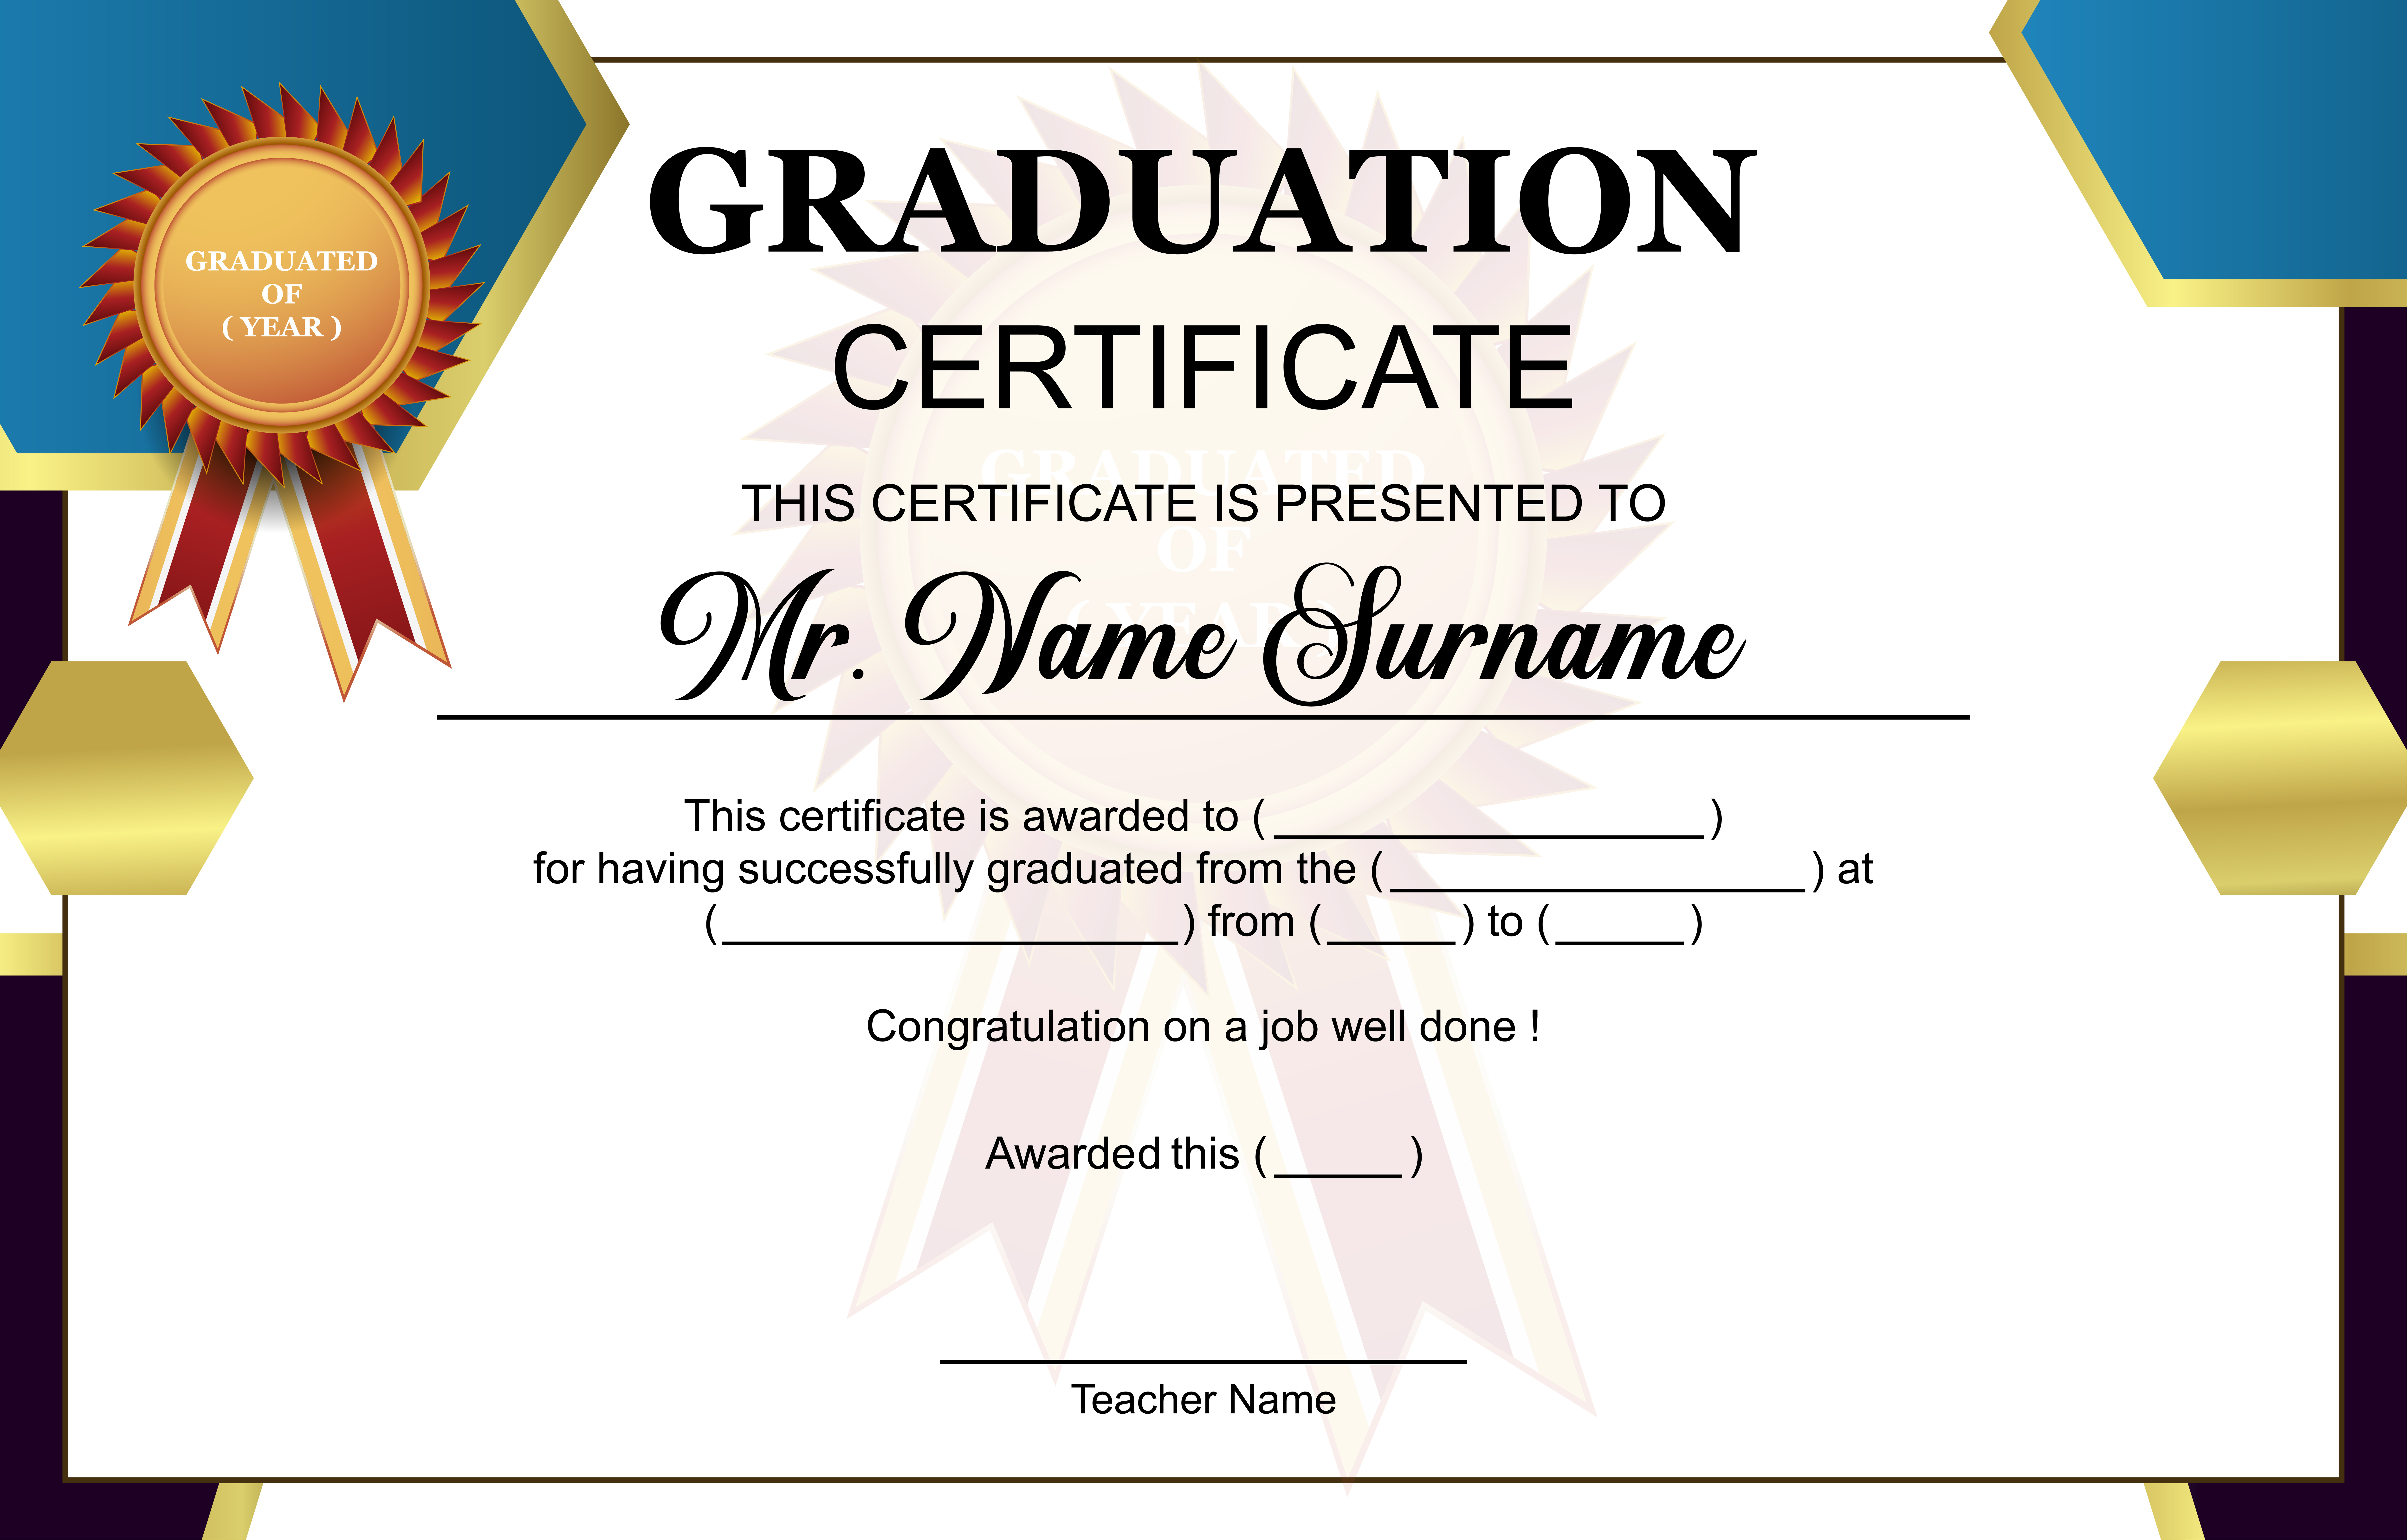 Graduation Certificate Template 10 Vector Art At Vecteezy With College Graduation Certificate Template